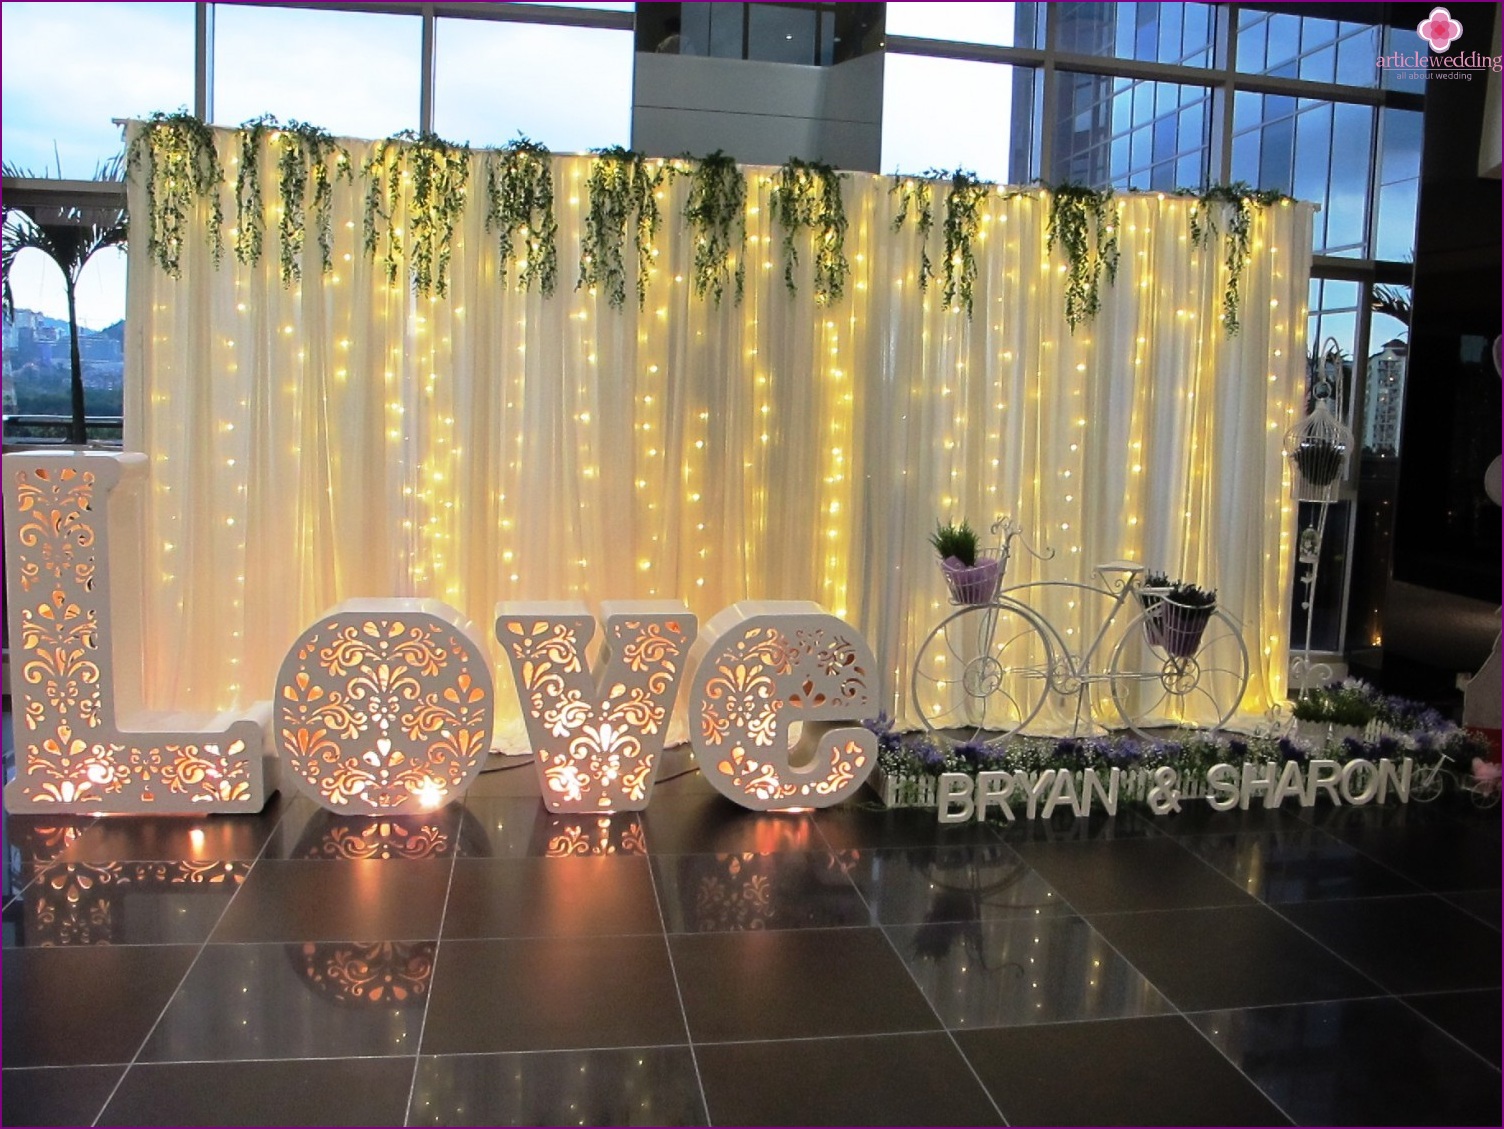 LEDs for decorating a wedding photo zone